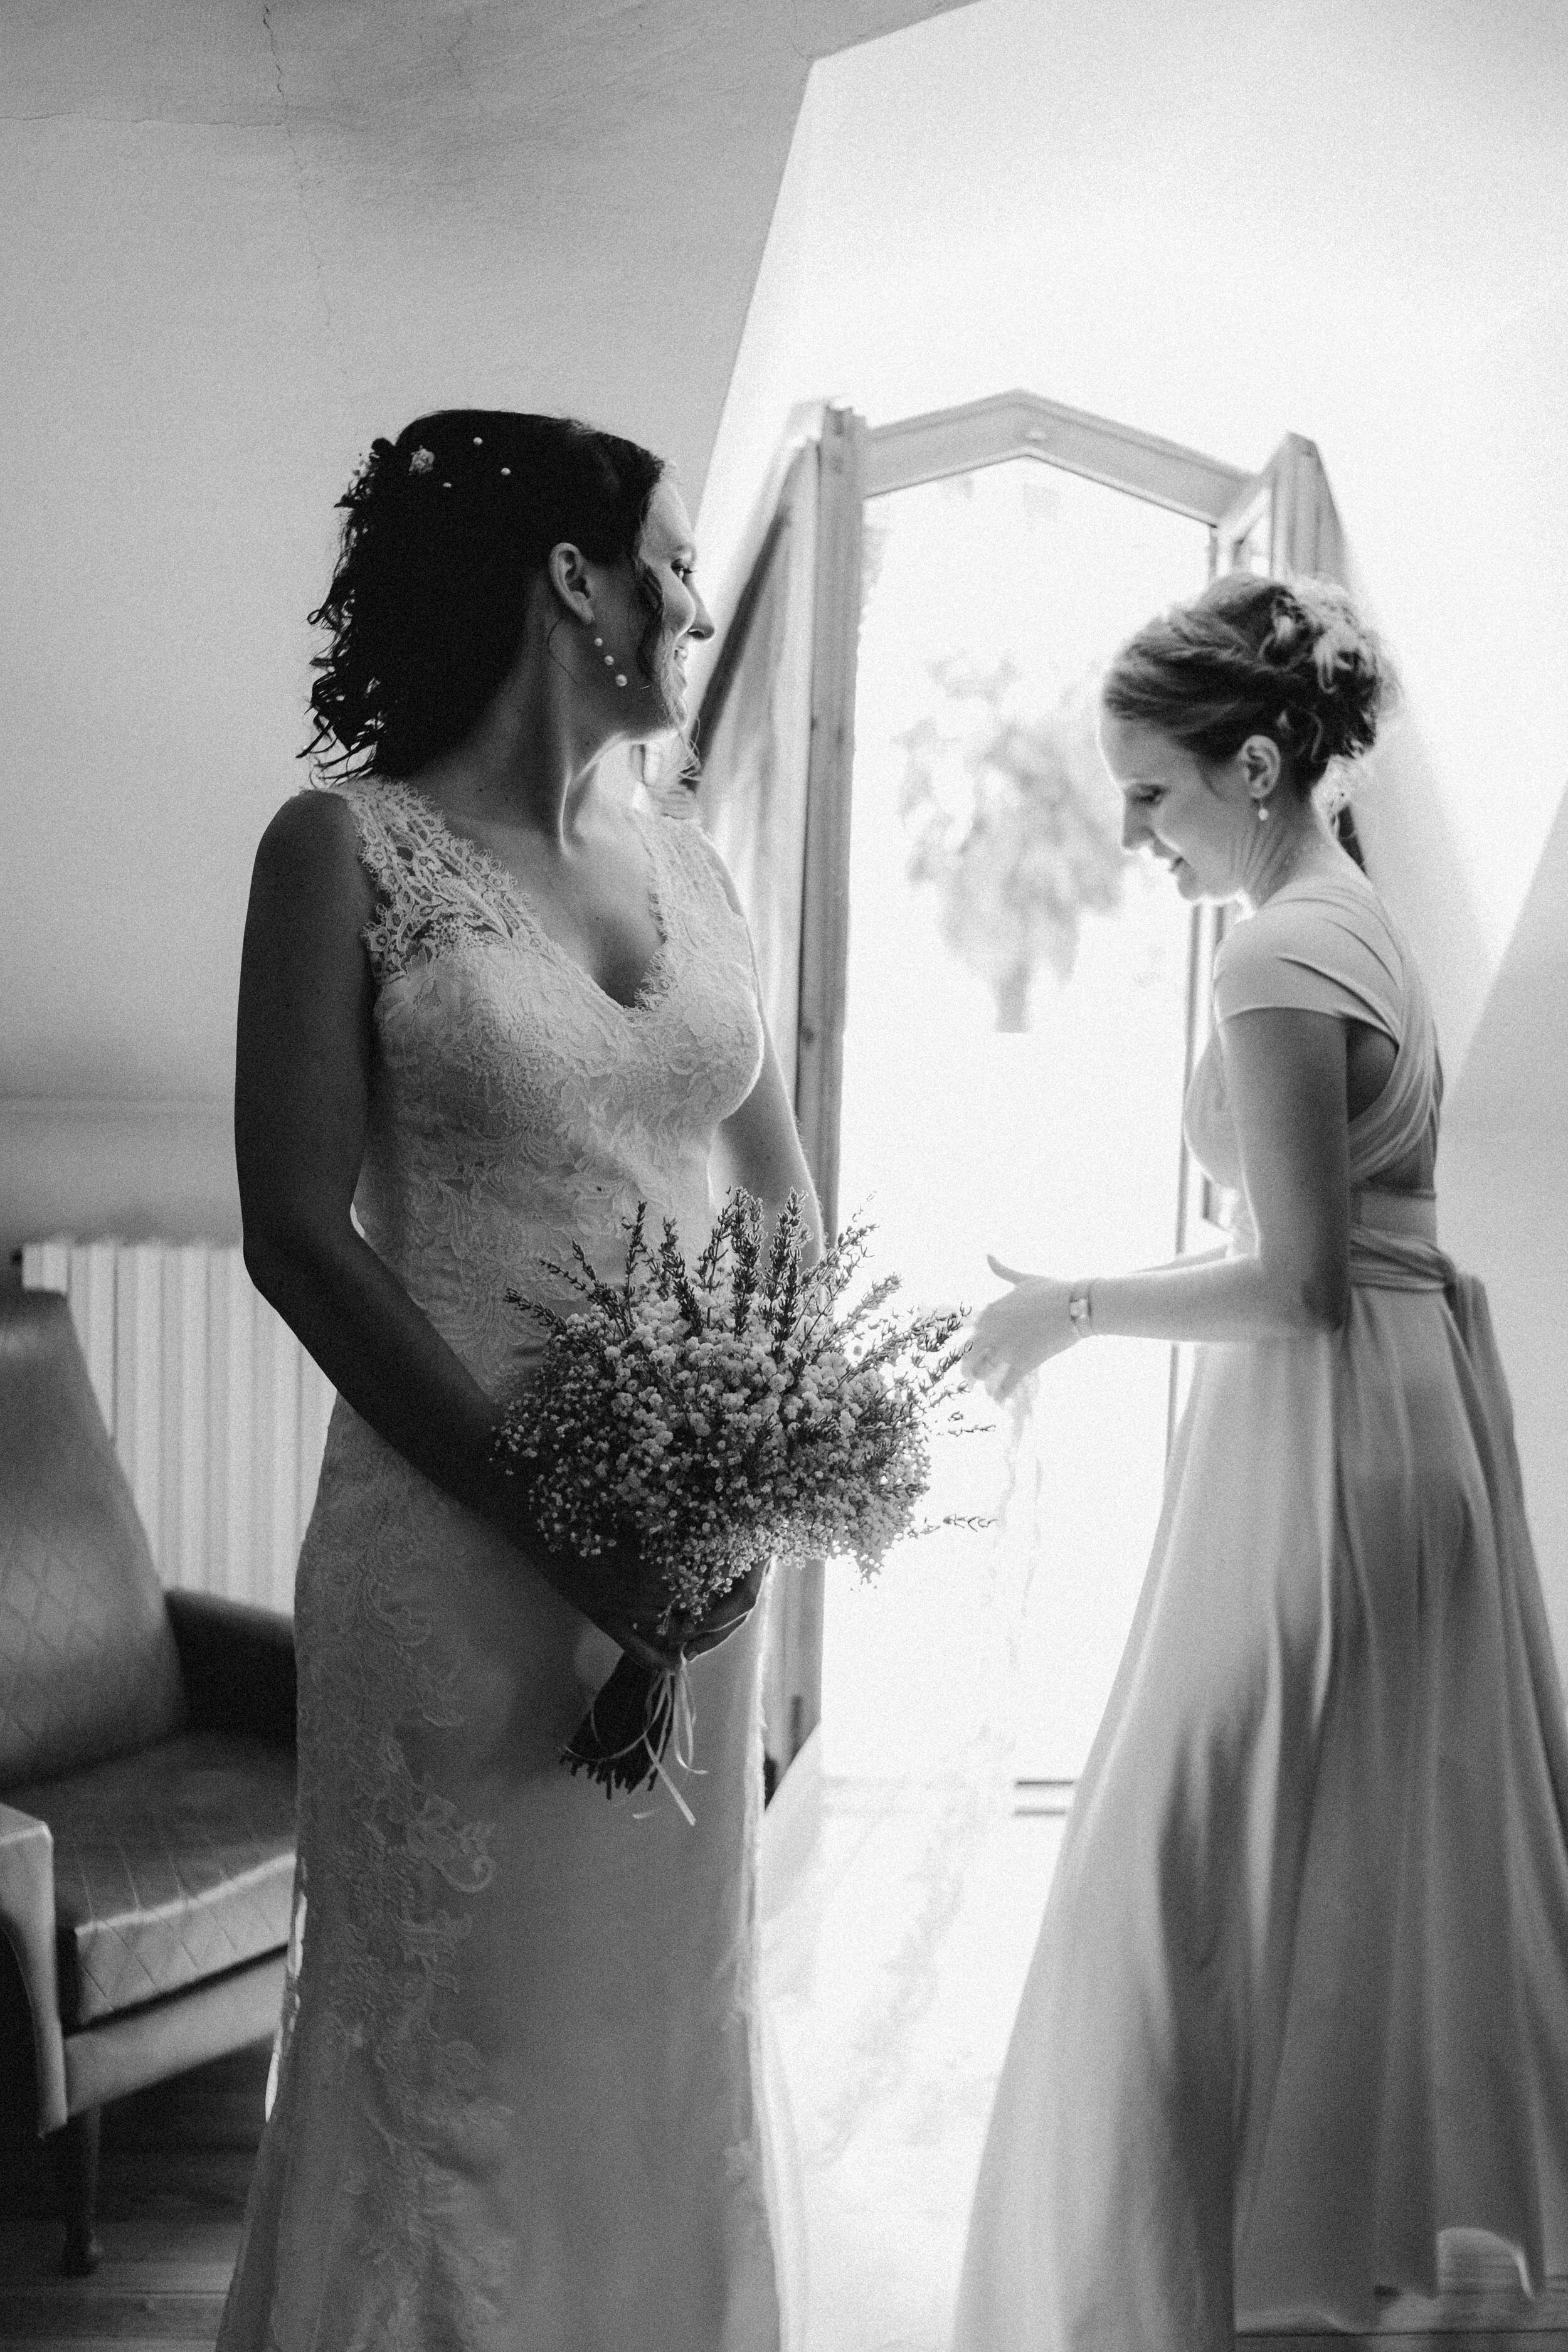 016 - Preparazione sposa - Miriam Callegari Fotografa.JPG